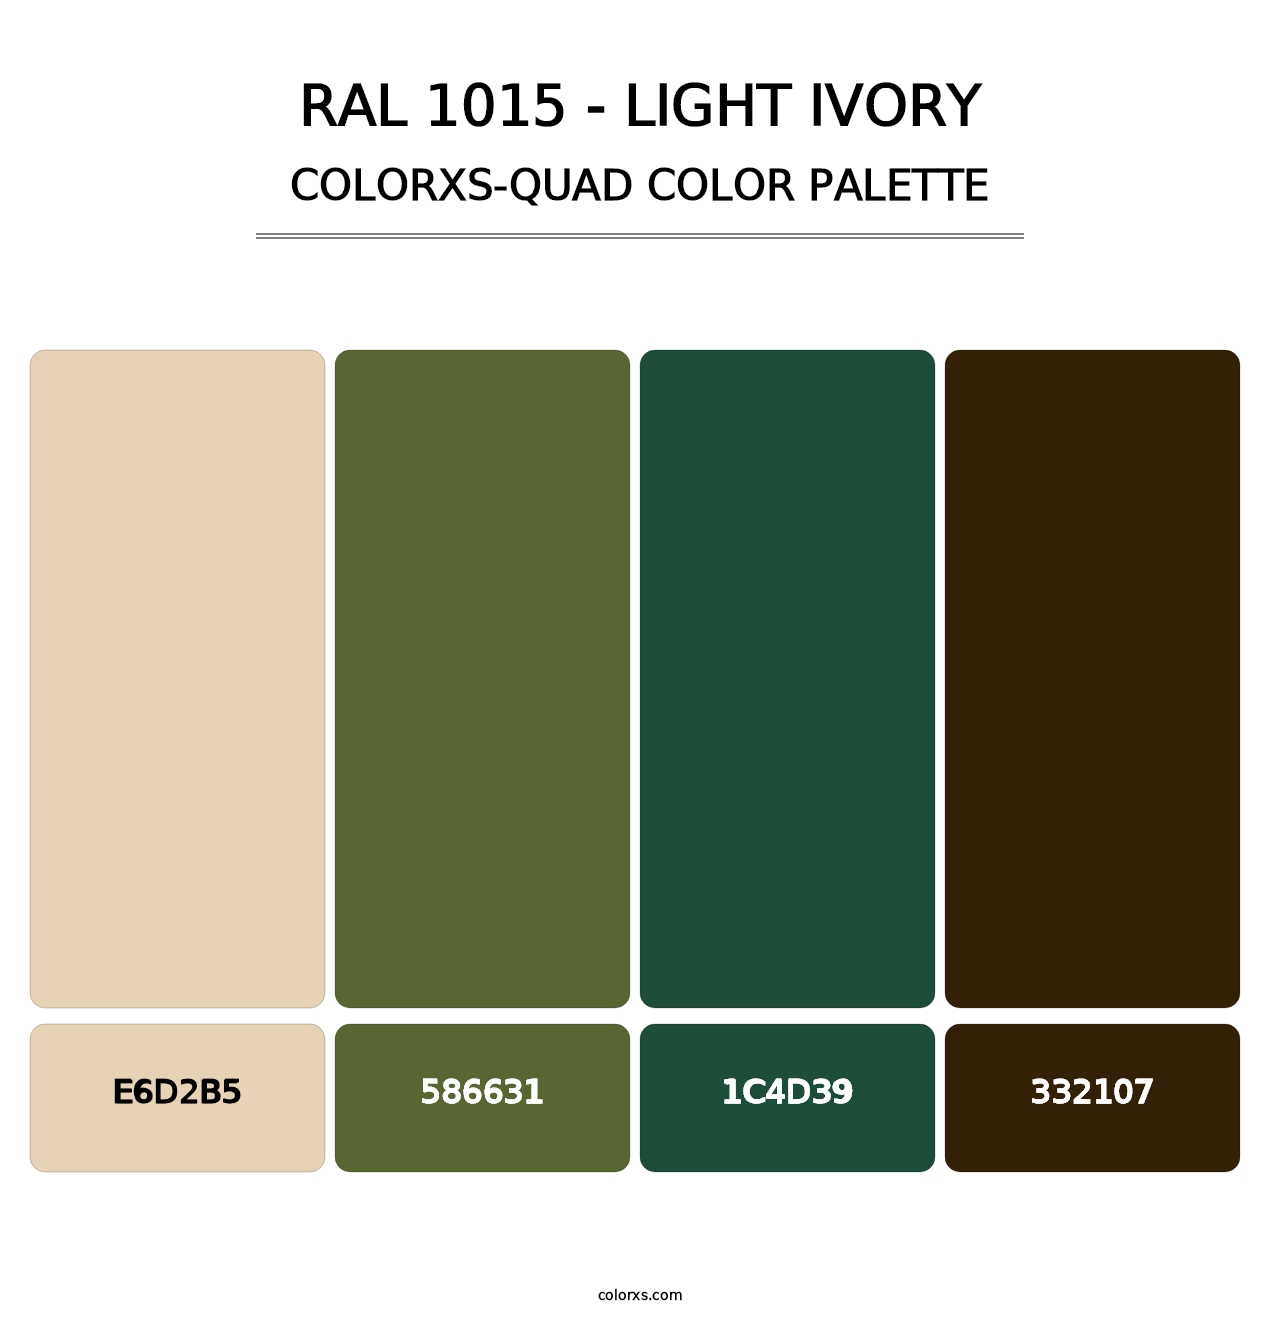 RAL 1015 - Light Ivory - Colorxs Quad Palette